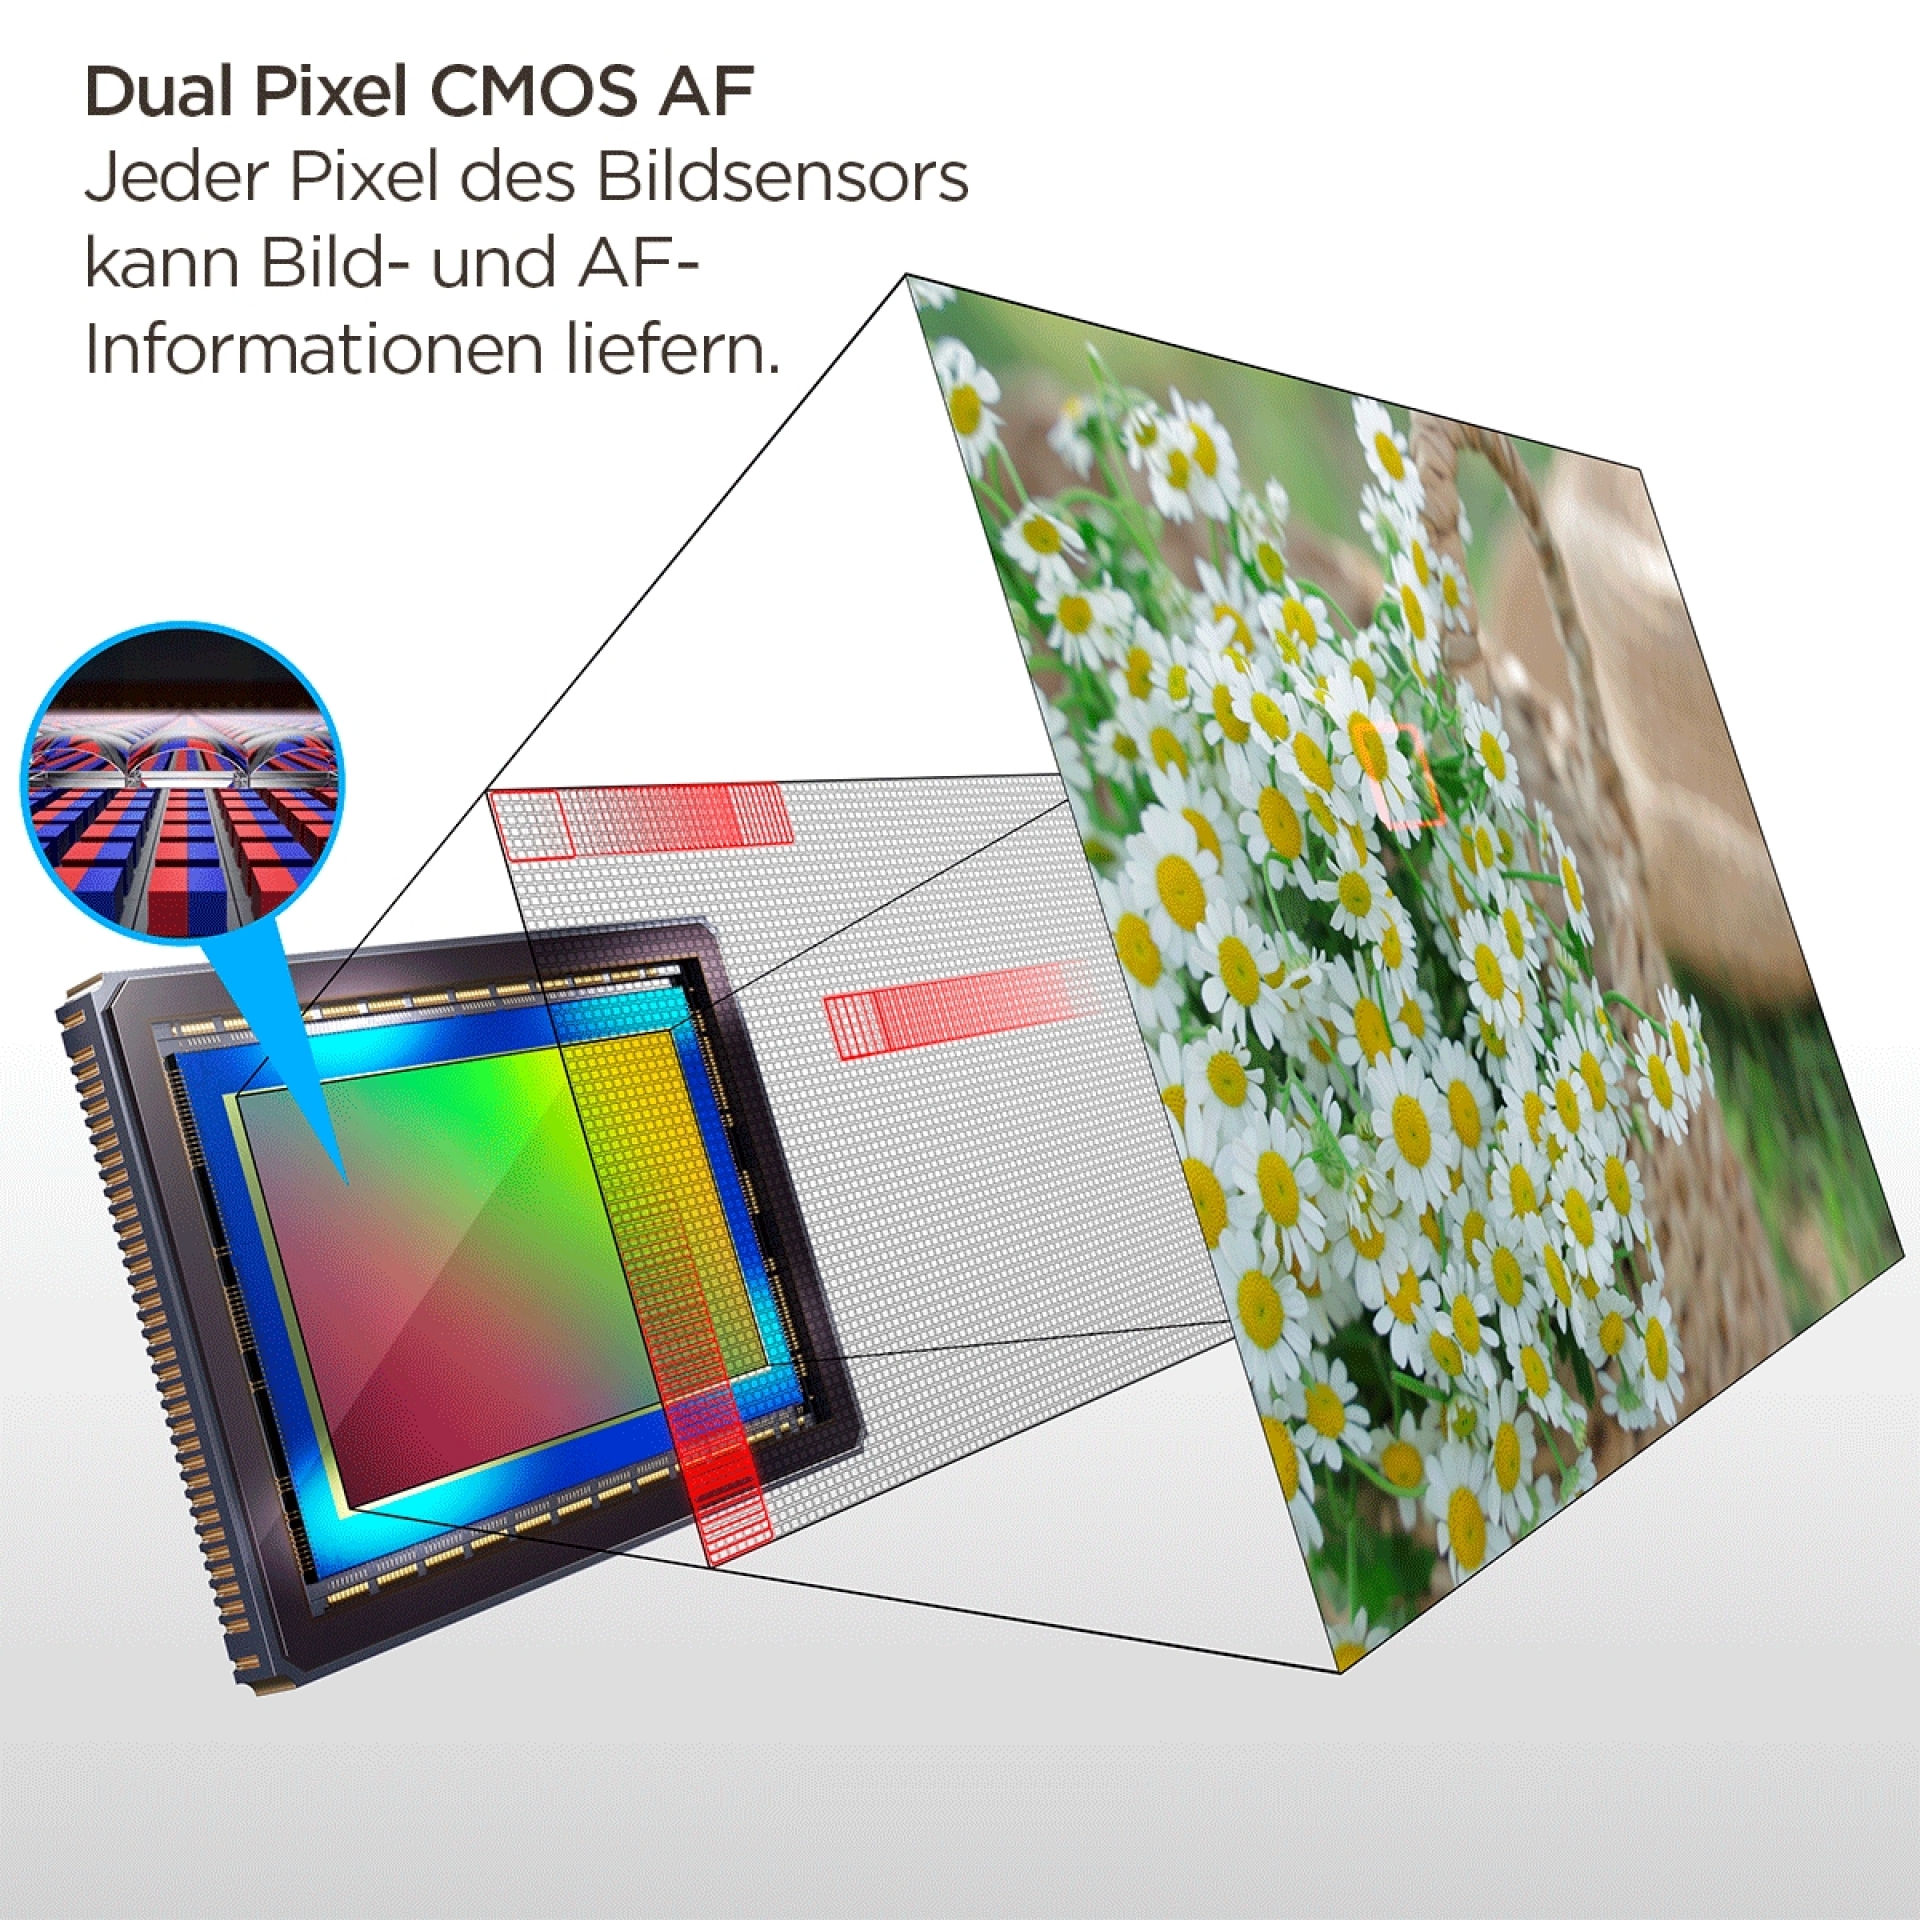 Dual Pixel CMOS AF Technologie, EOS R-System